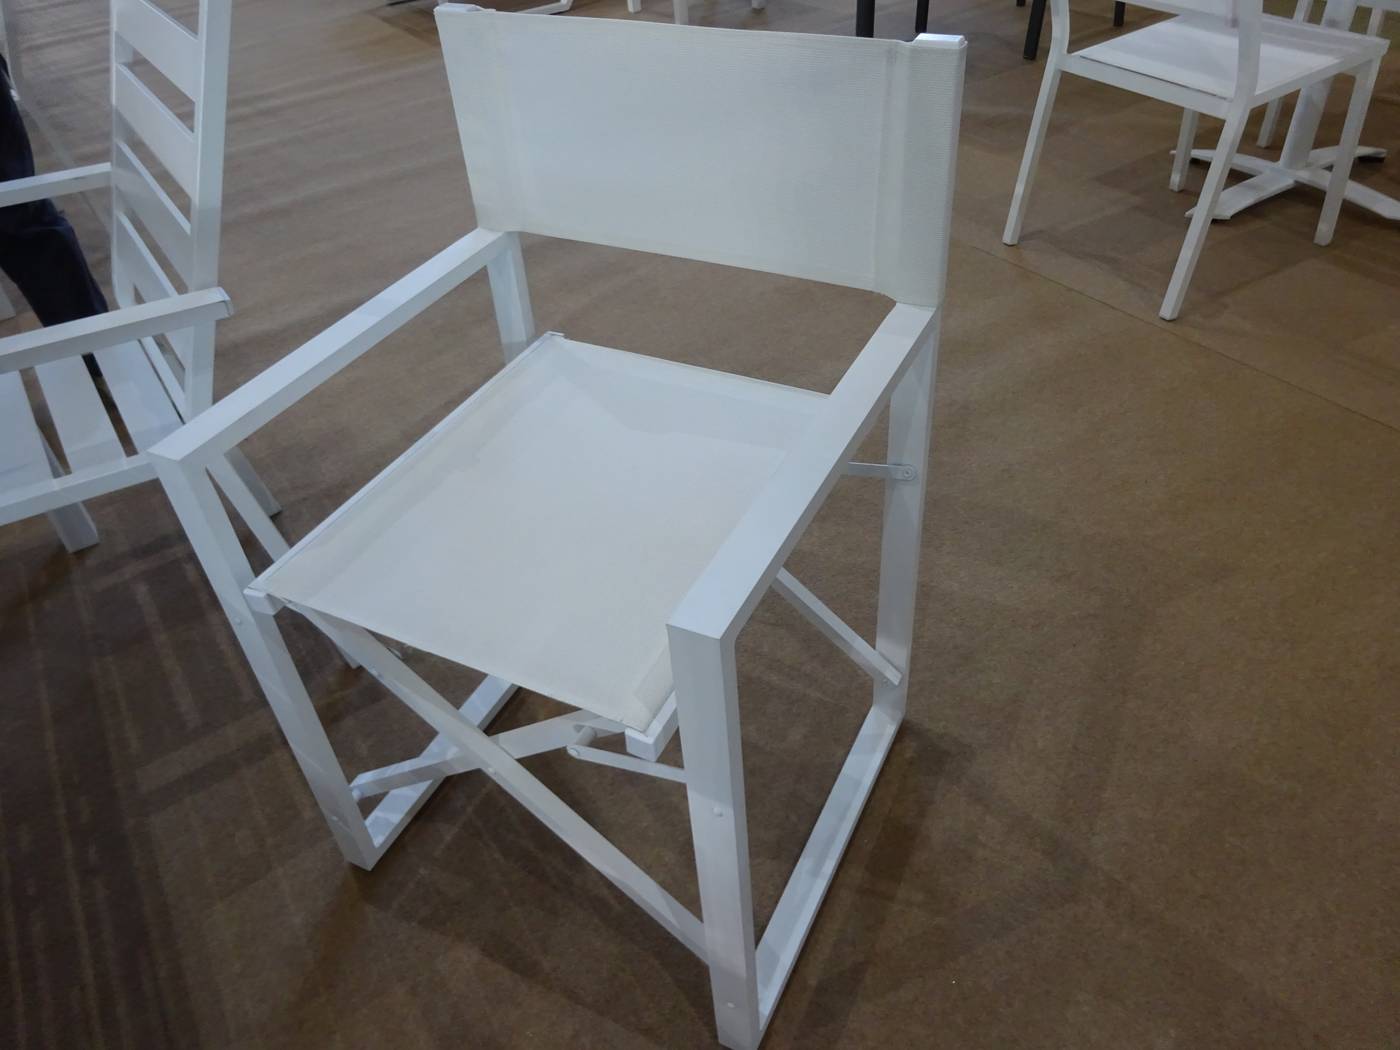 Sillón de Director de aluminio plegable color blanco o antracita, con asiento y respaldo de textilen